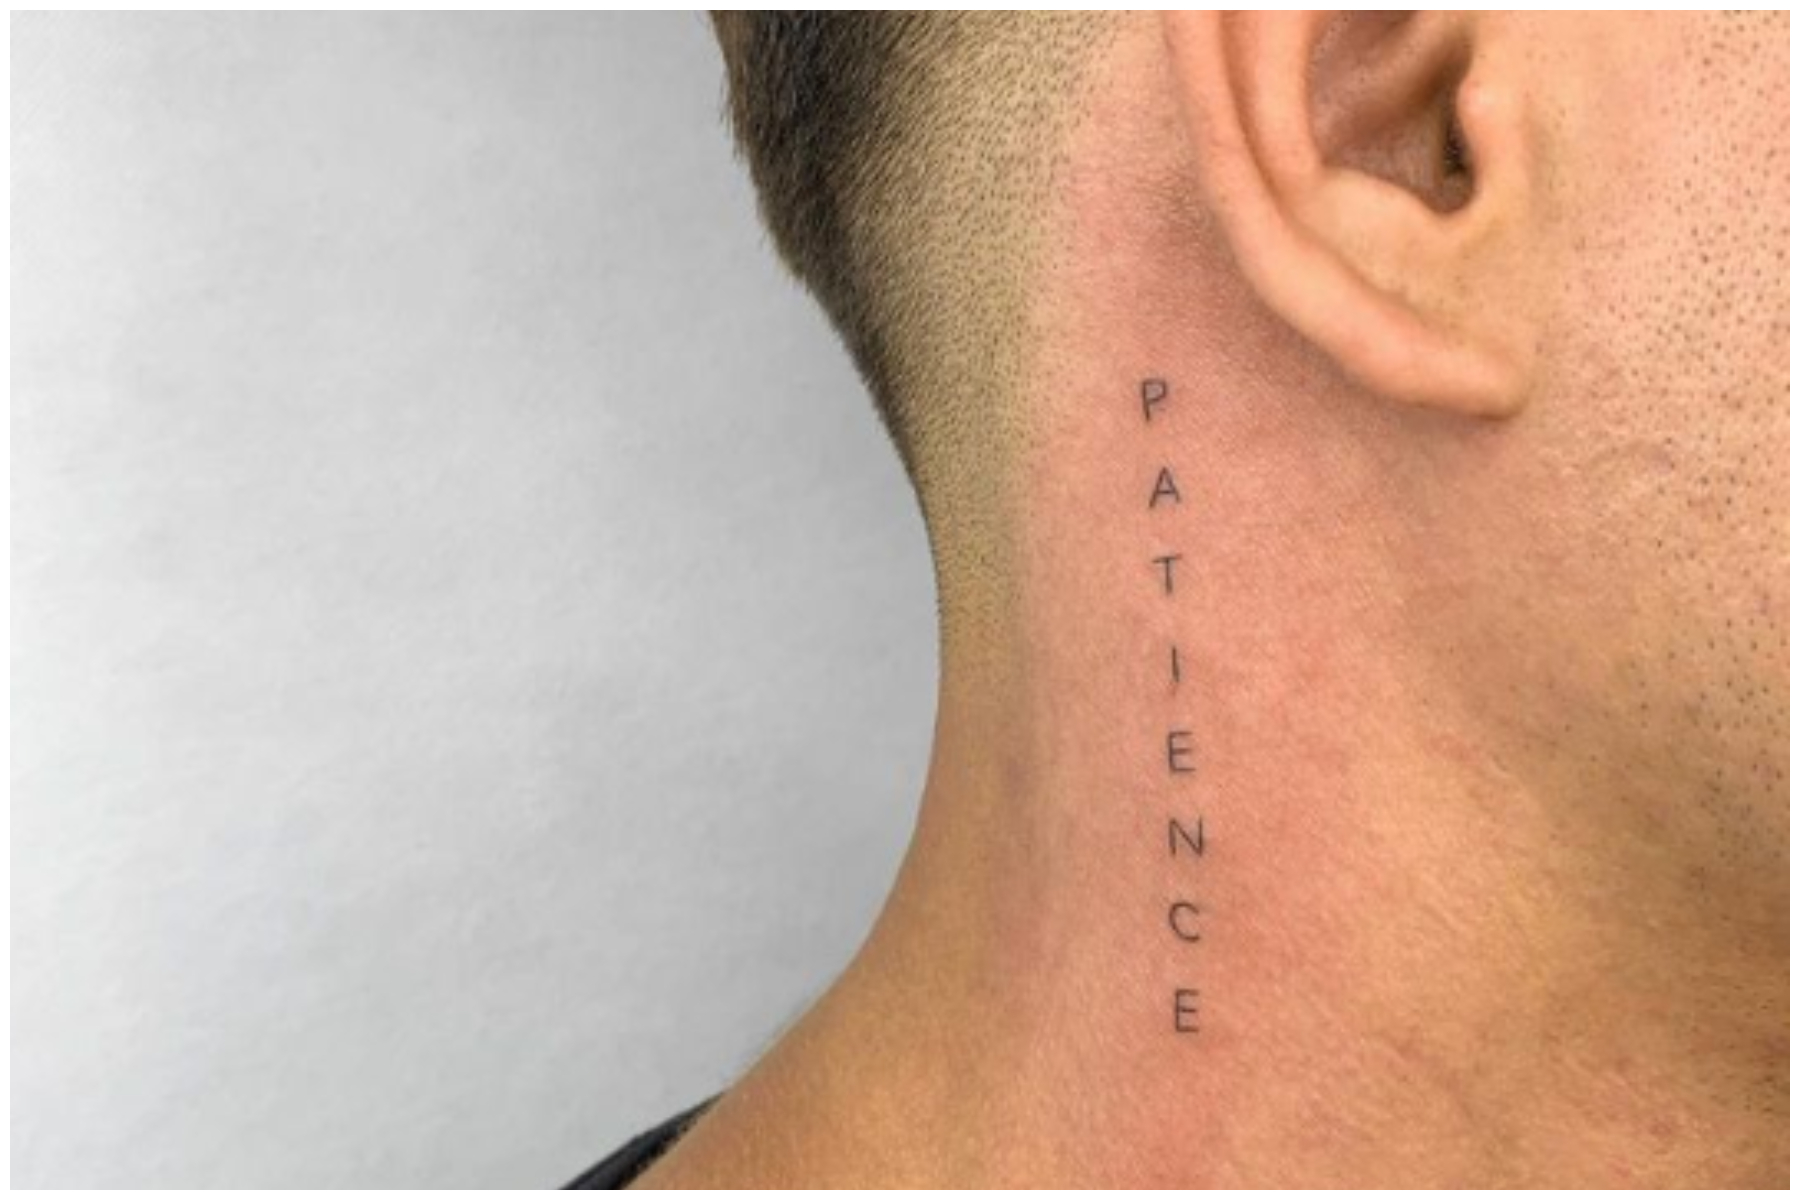 Small neck tattoos for men | Latest neck tattoo designs | Neck tattoo ideas  - YouTube